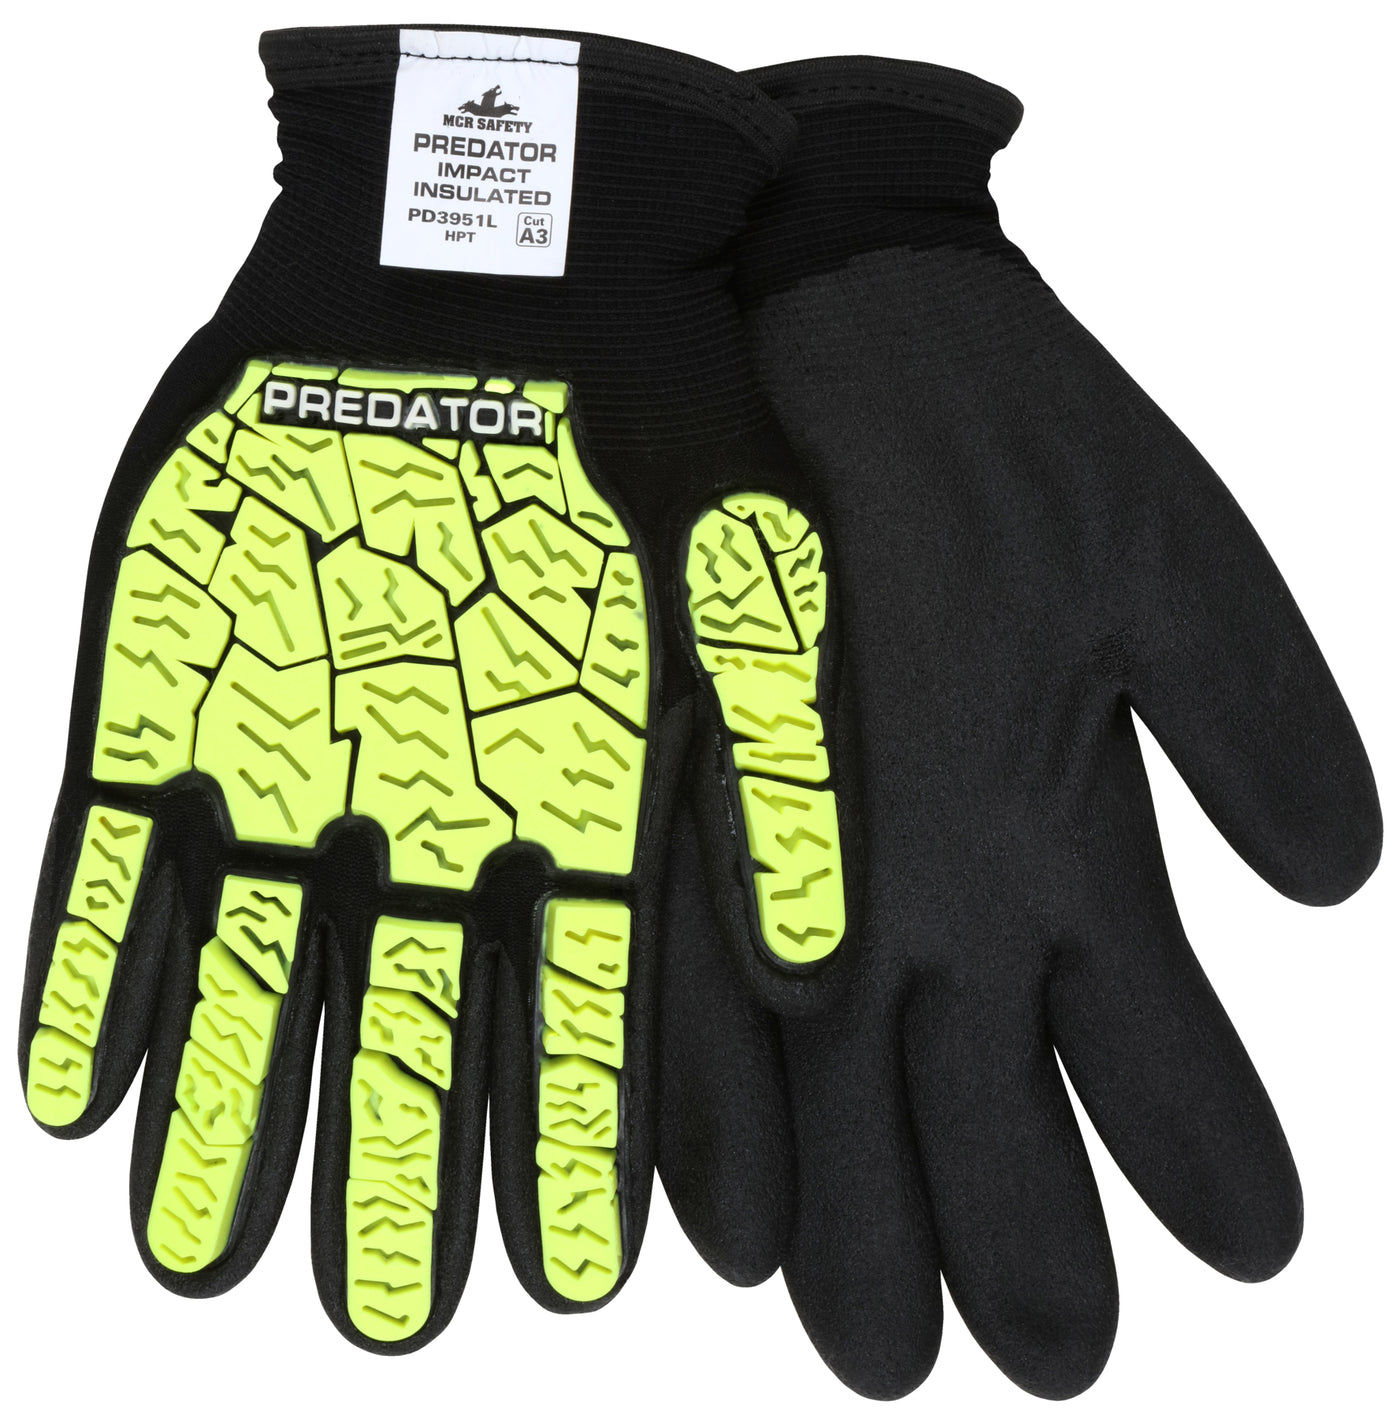 PD3951 - Predator® Insulated Mechanics Gloves